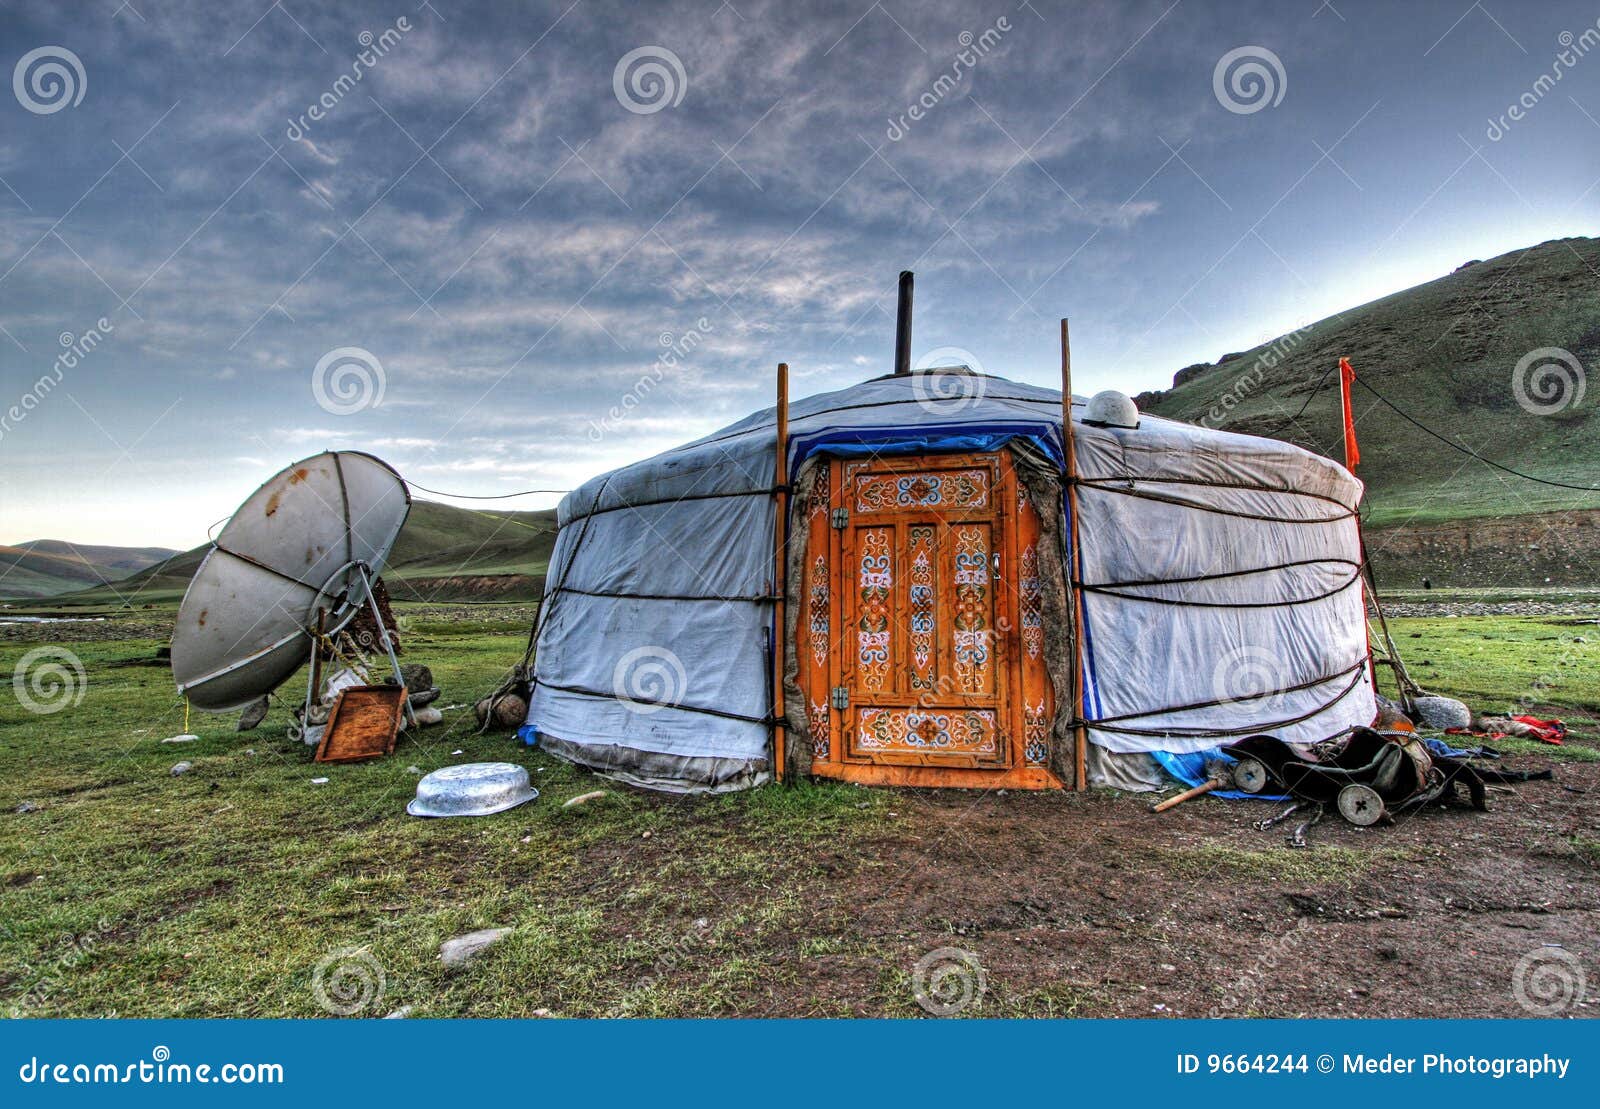 mongolian dwelling